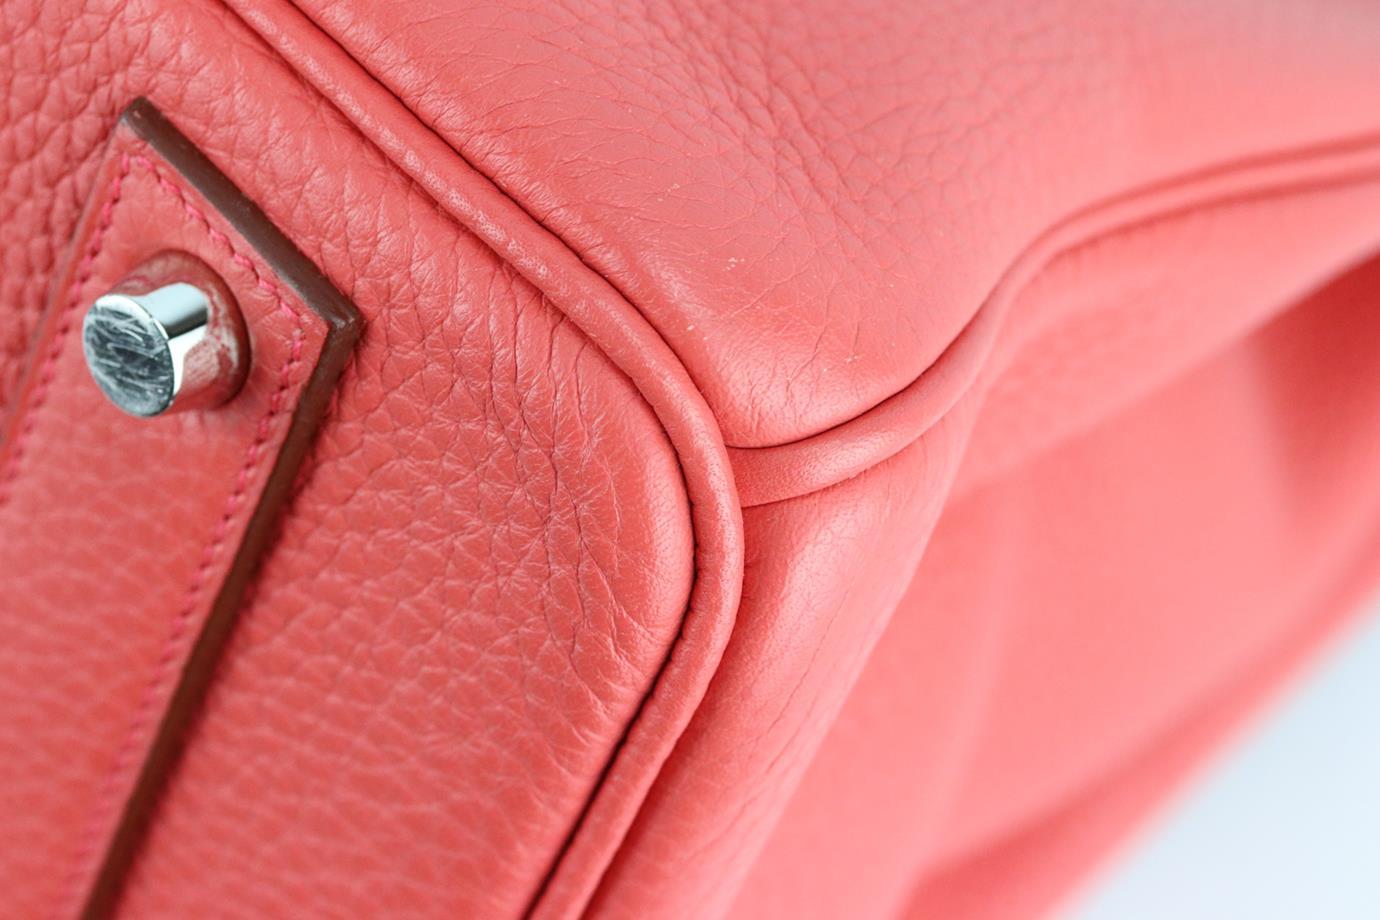 Hermès 2010 Birkin 40cm Togo Leather Bag For Sale 3